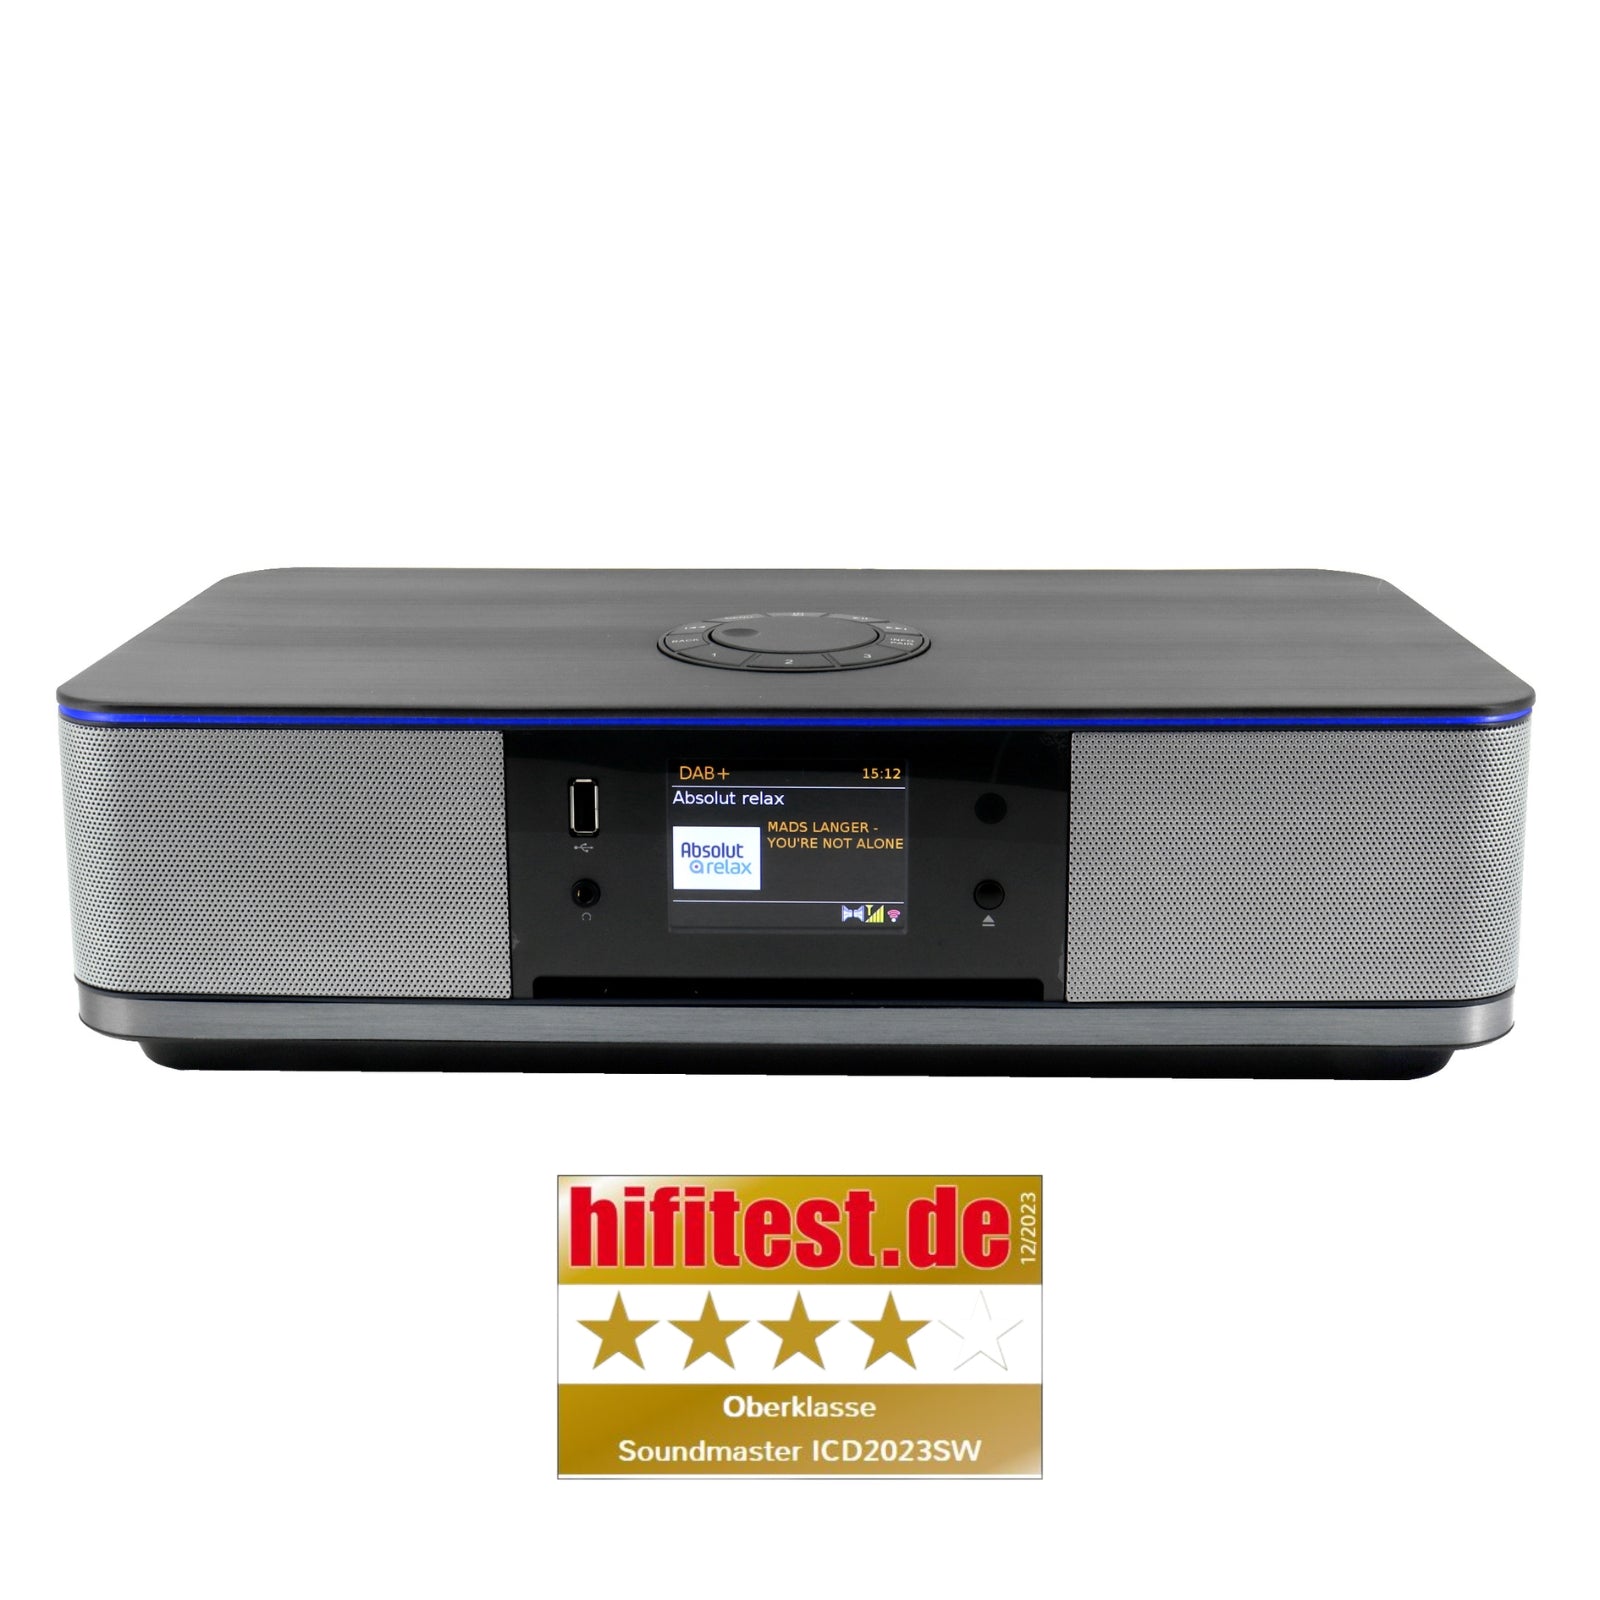 Soundmaster HighLine ICD2023SW stereo system Internet radio WLAN 2.4/5 GHz LED ambient lighting DAB+ Bluetooth CD player USB MP3 APP color display alarm clock